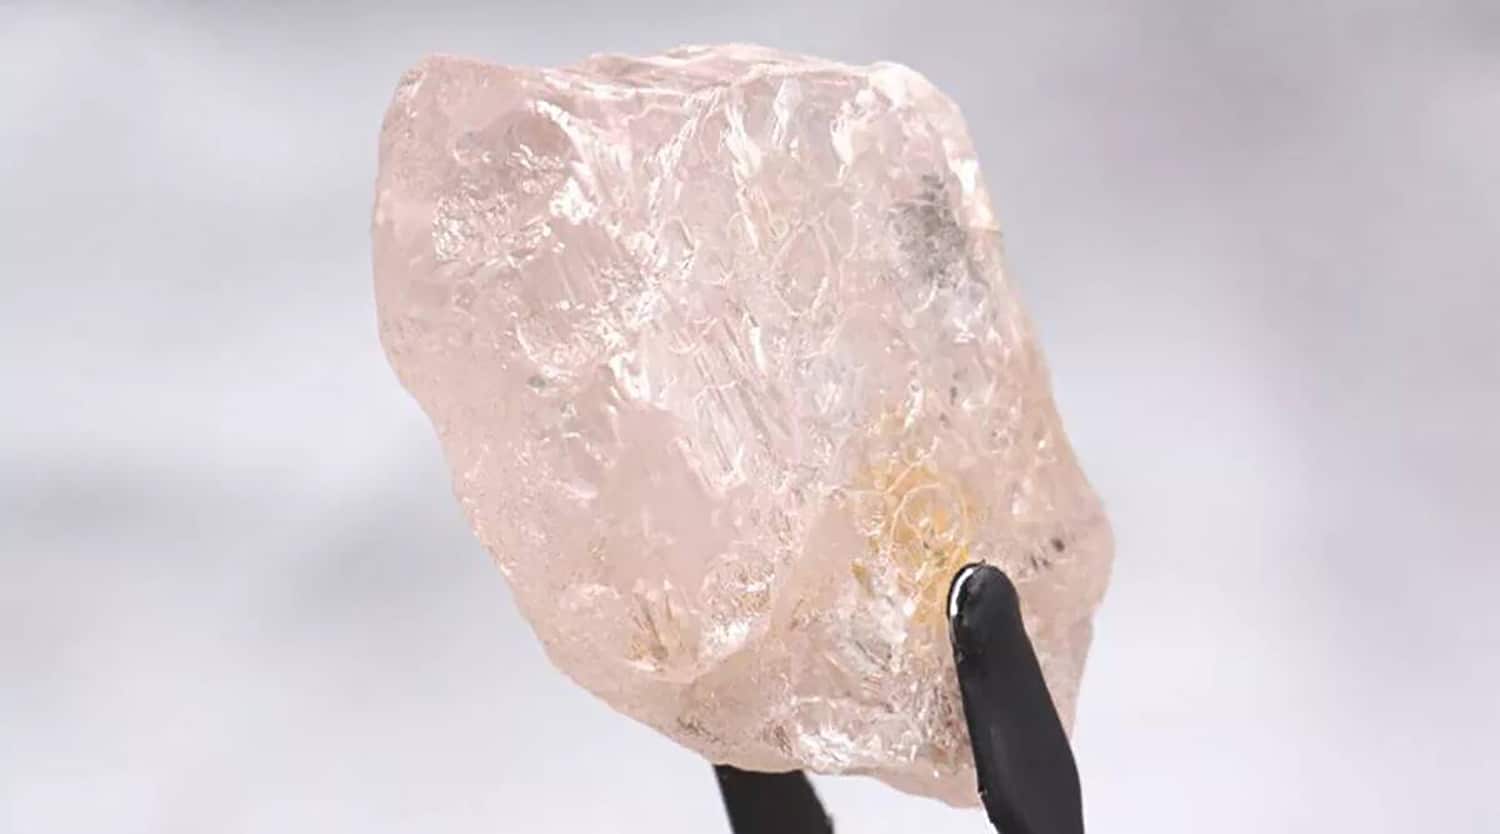 Premium Photo  Large uncut diamond stone in a natural state